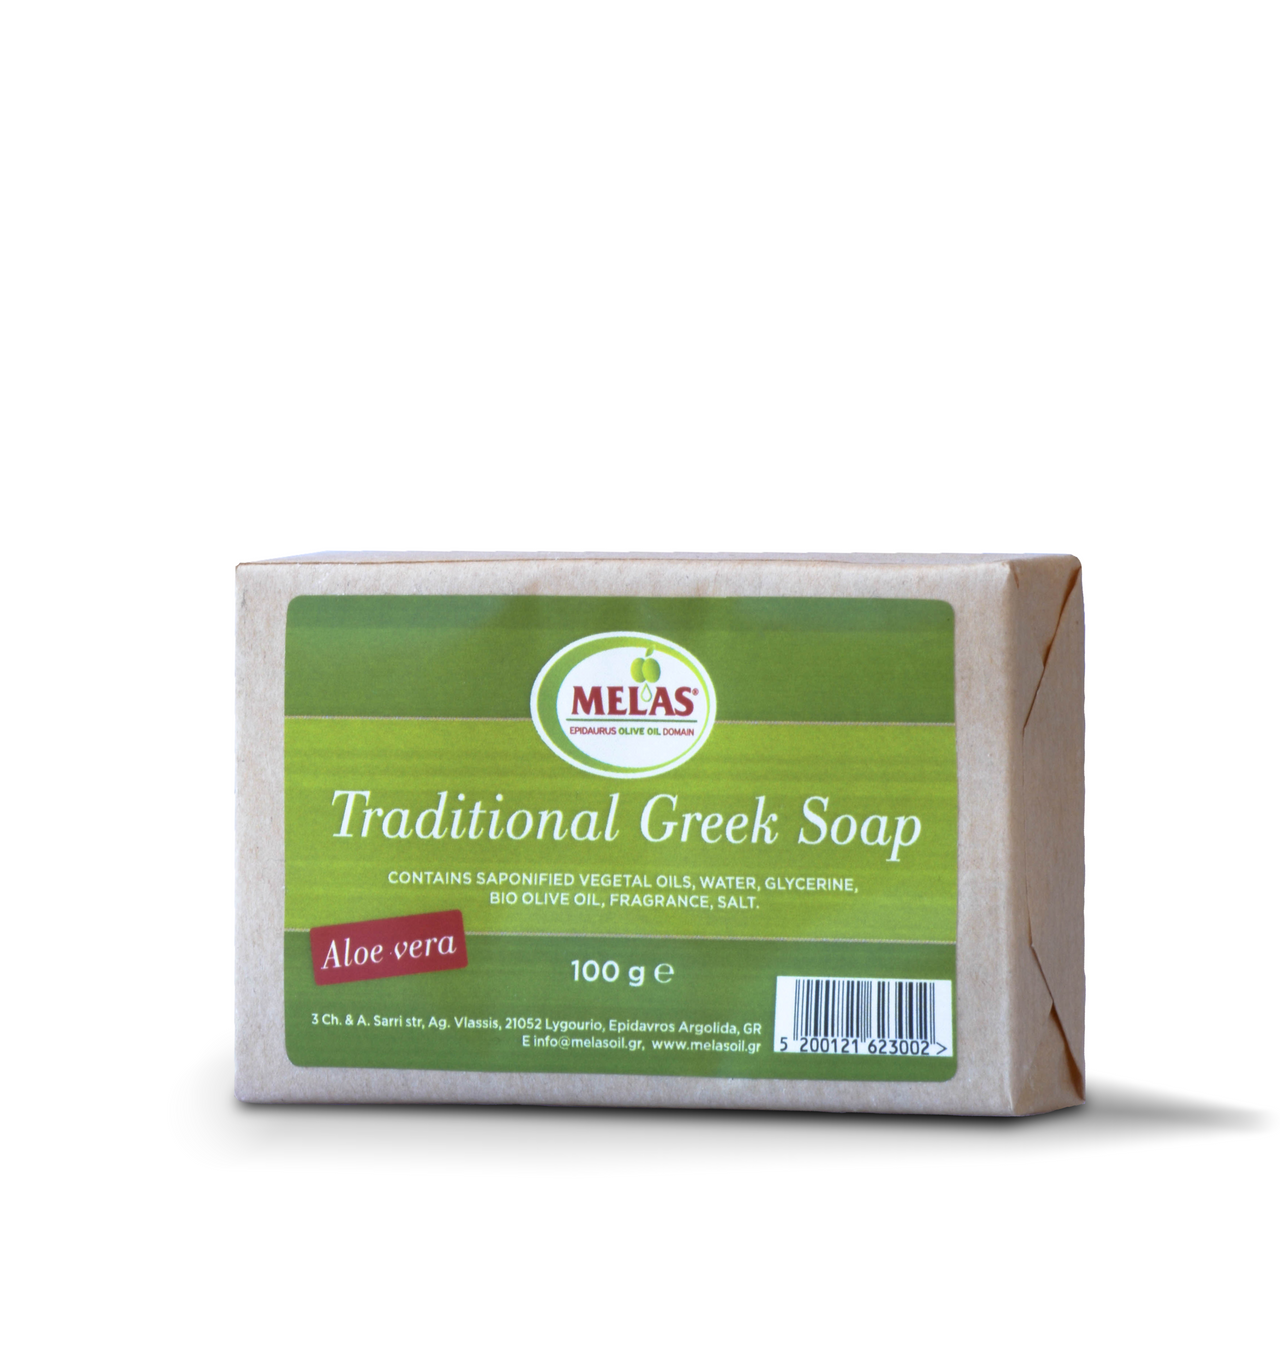 Melas -Traditional Greek Soap - [100g]